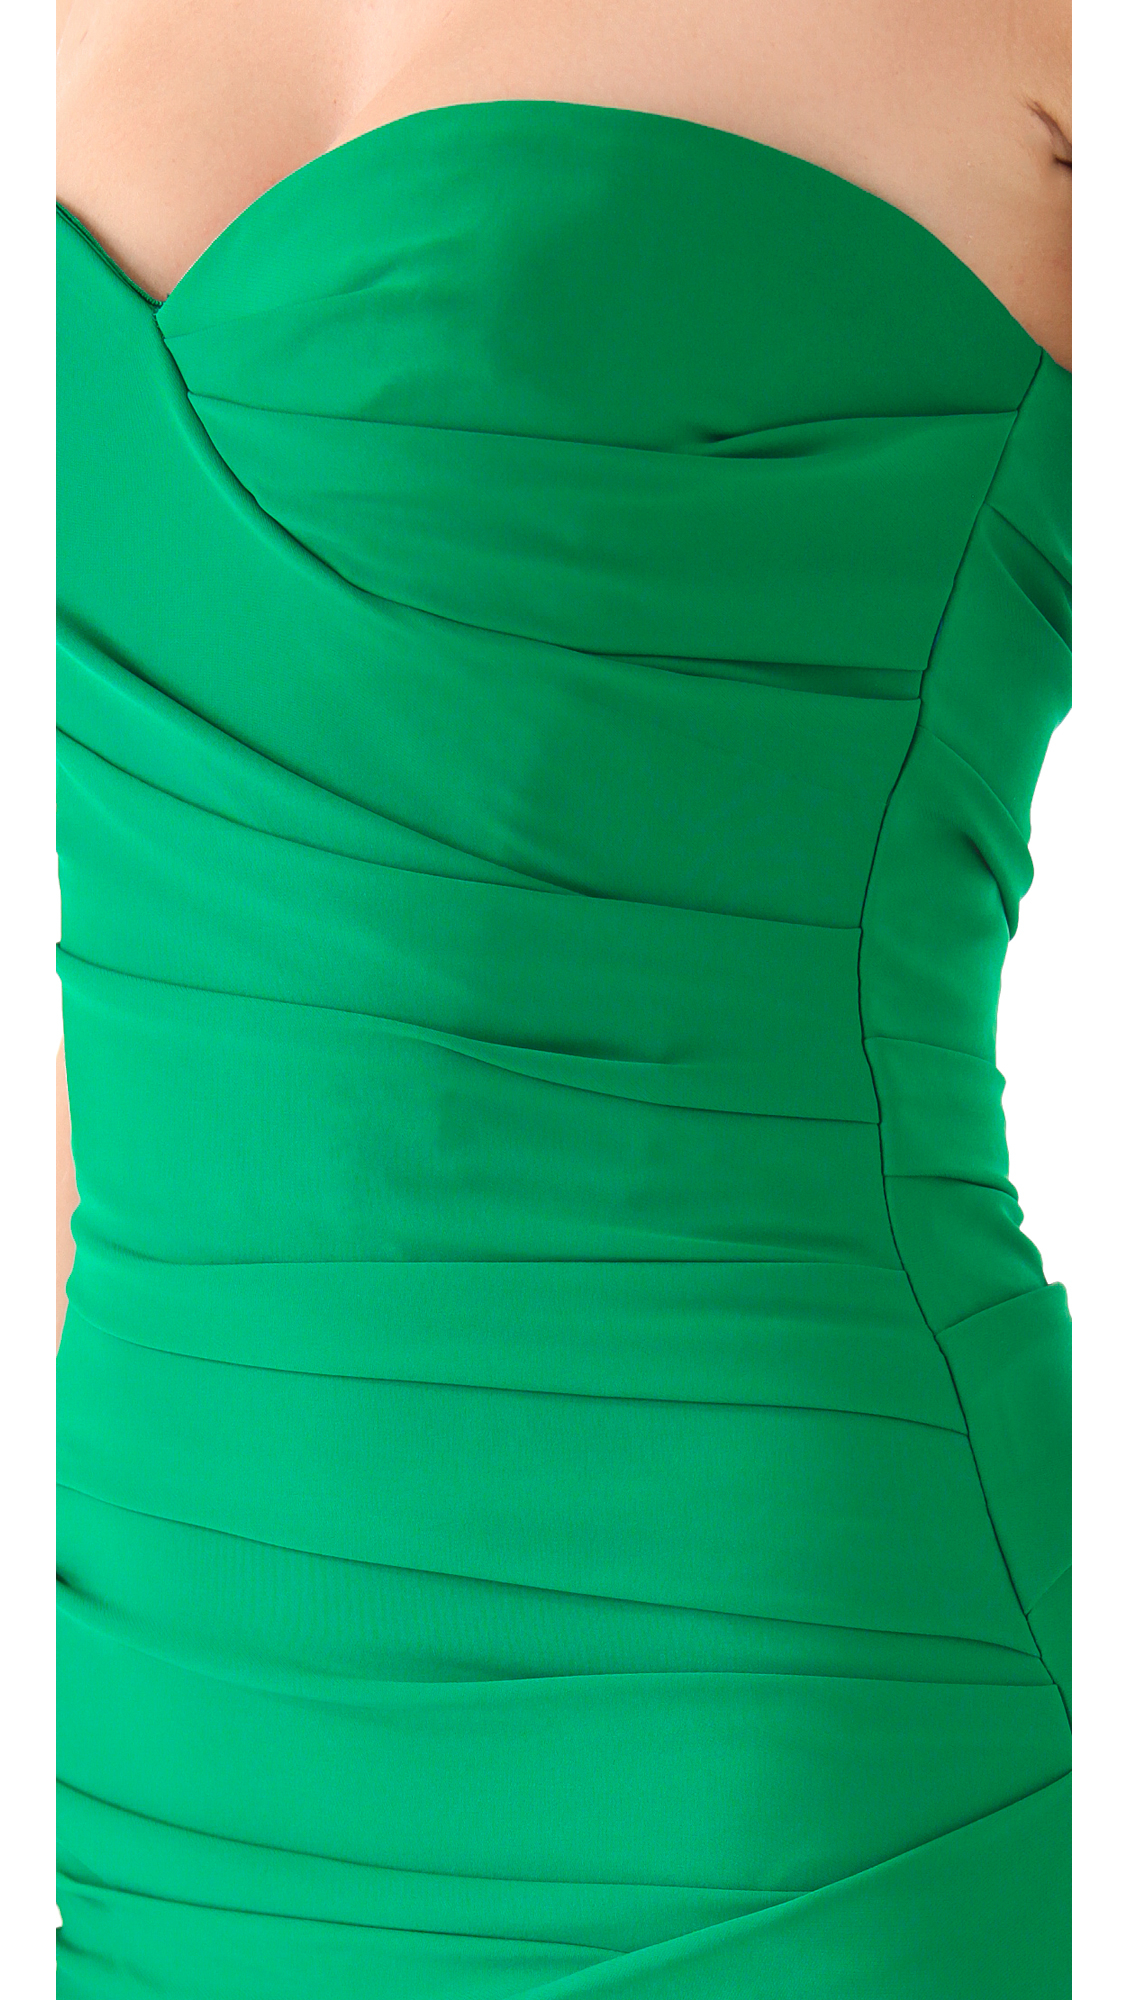 Lyst - Bcbgmaxazria Madge Strapless Dress - Ultra Green in Green